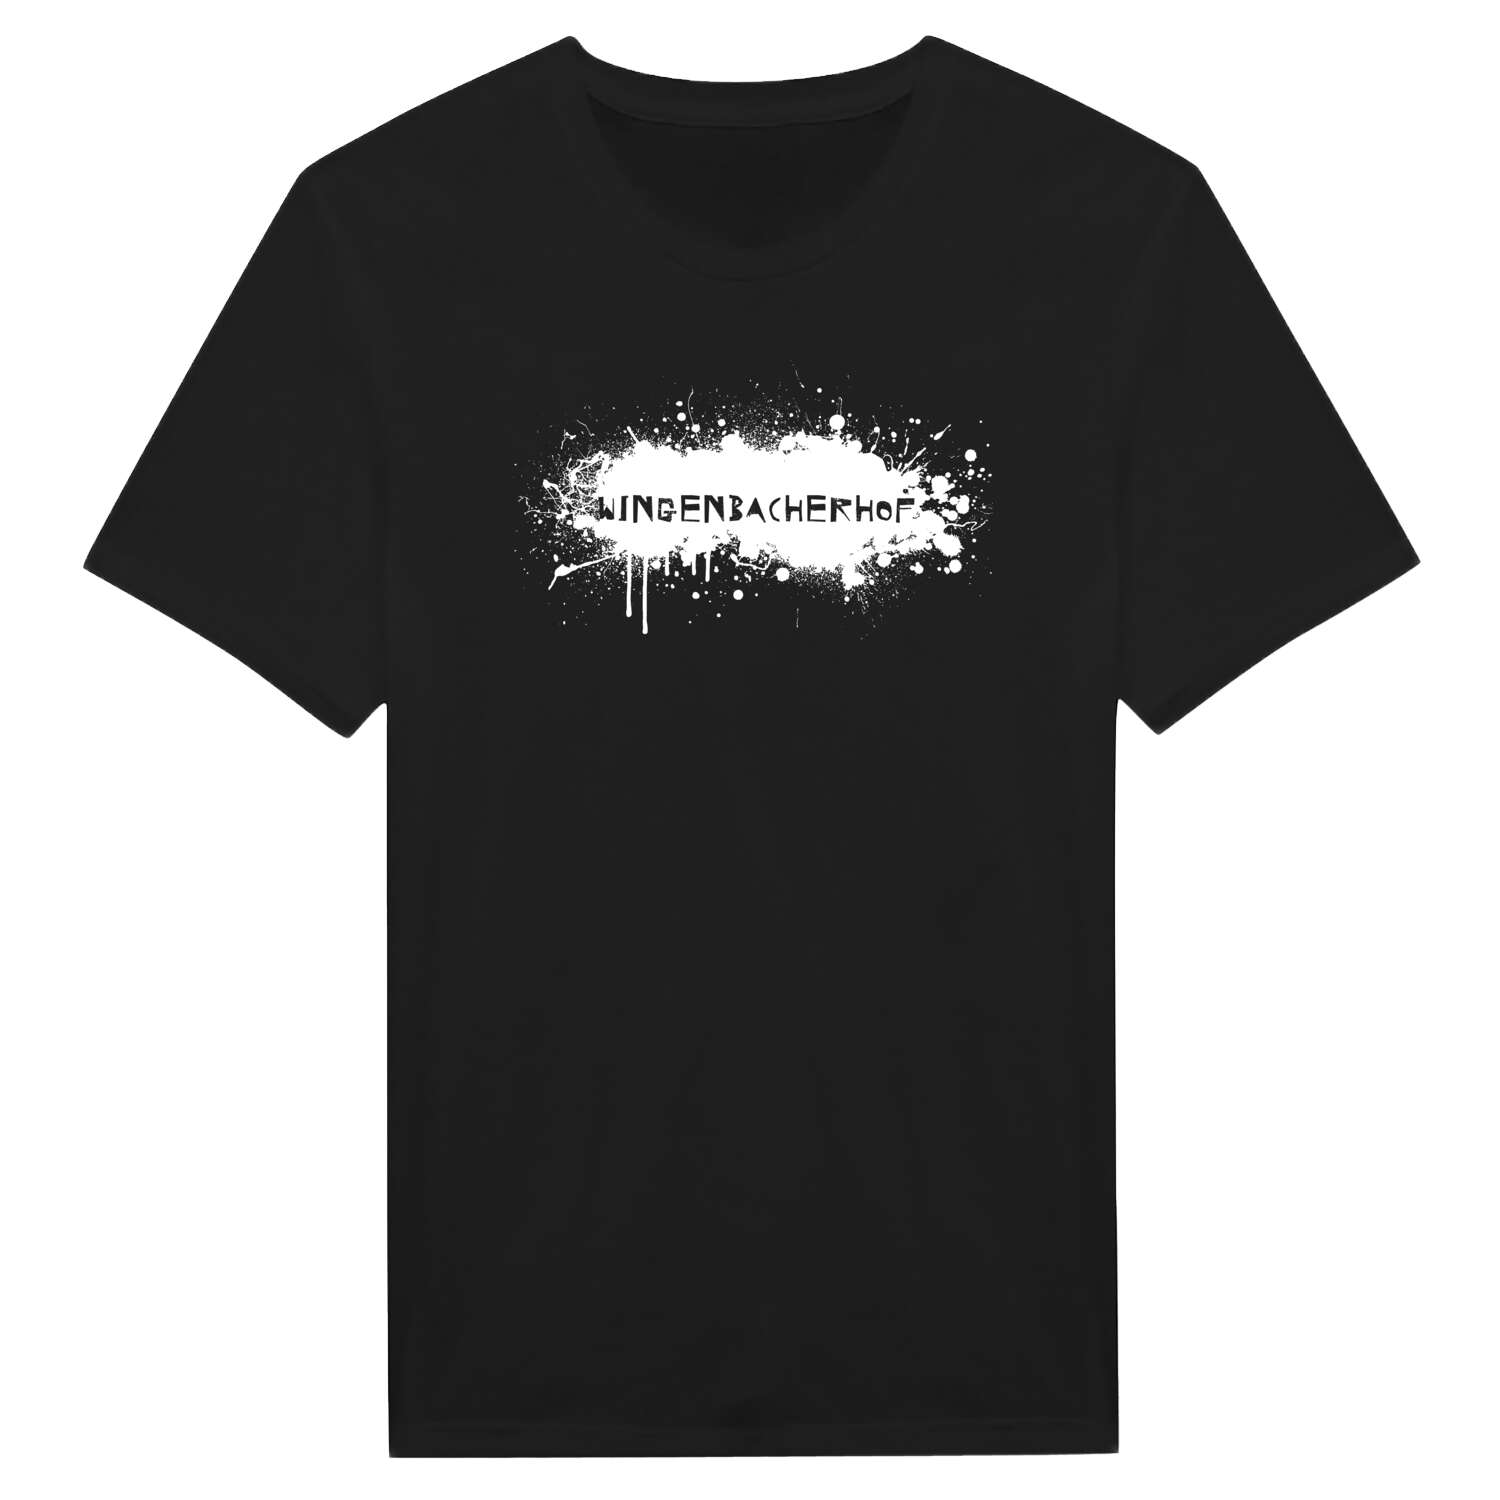 Wingenbacherhof T-Shirt »Paint Splash Punk«